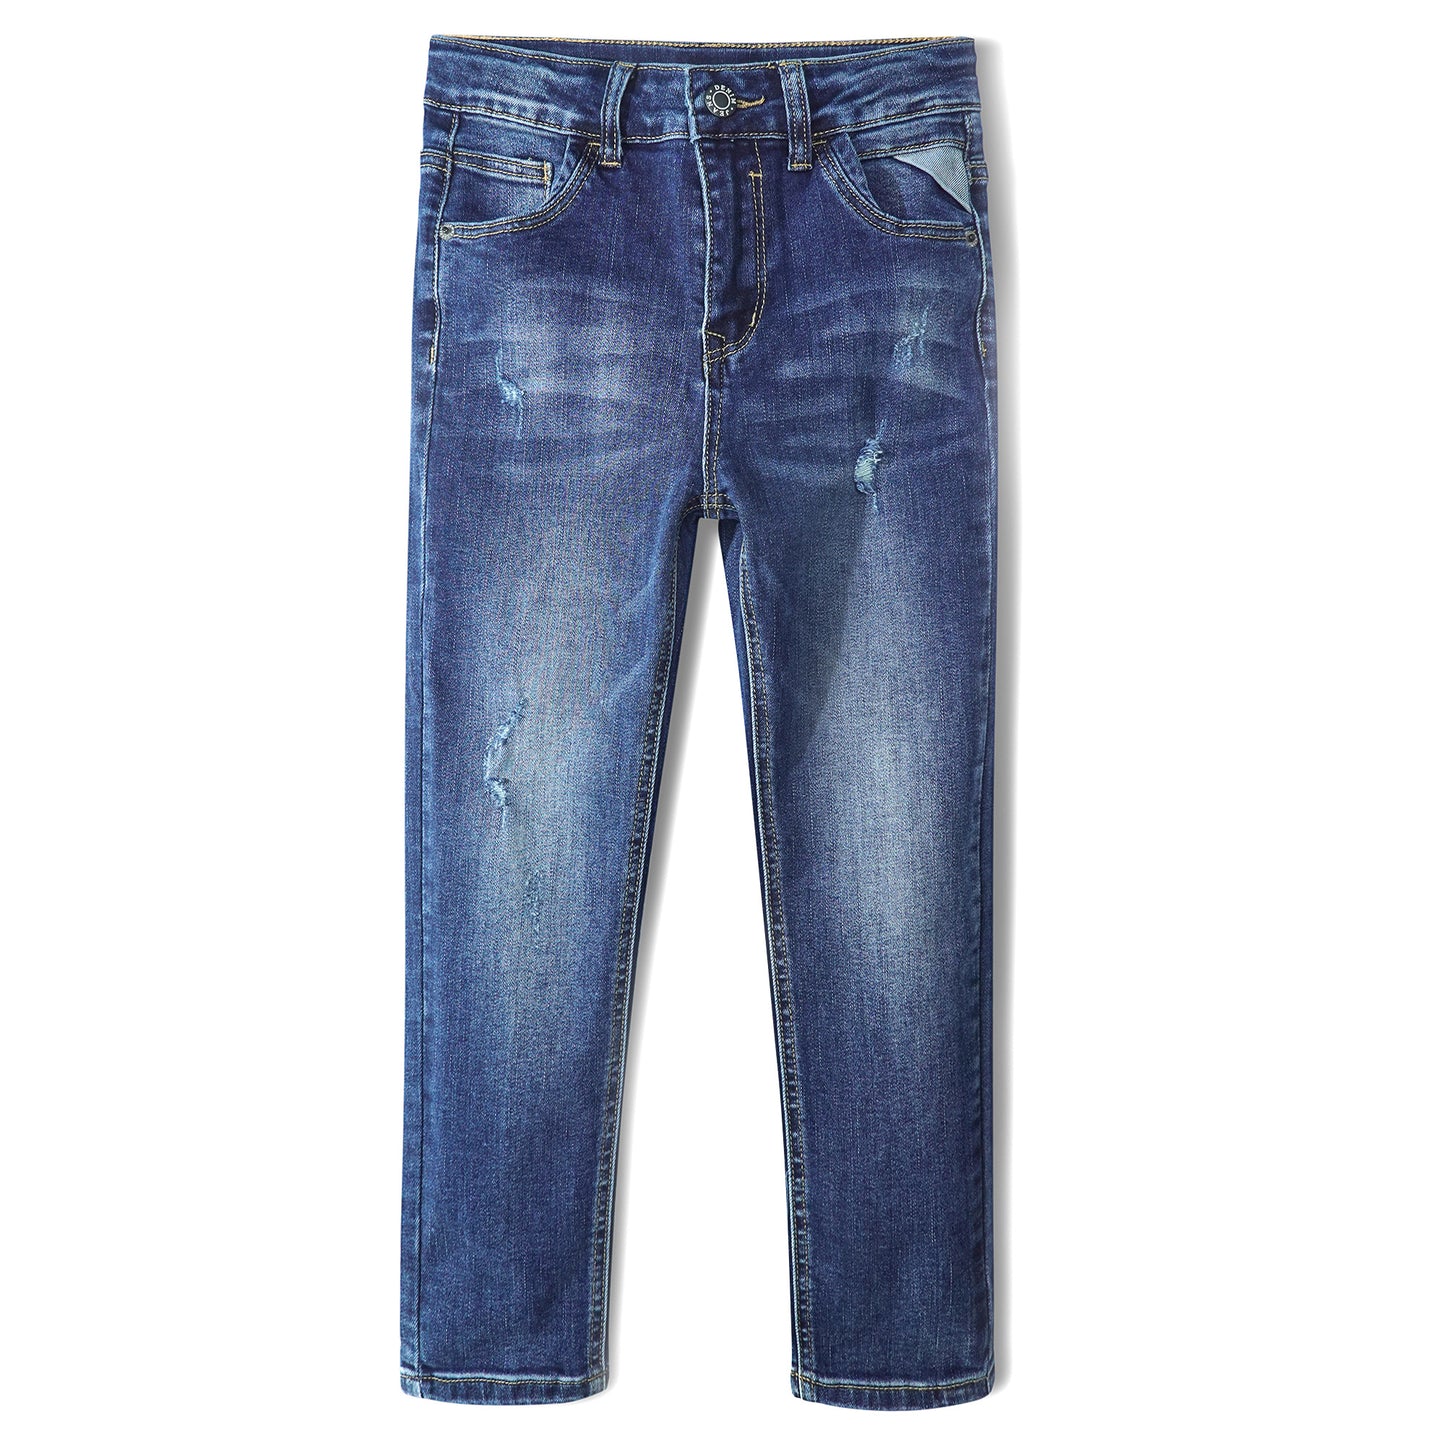 Boys Jeans, 12M-14T Children Ripped Soft Stretchy Classic Denim Pants